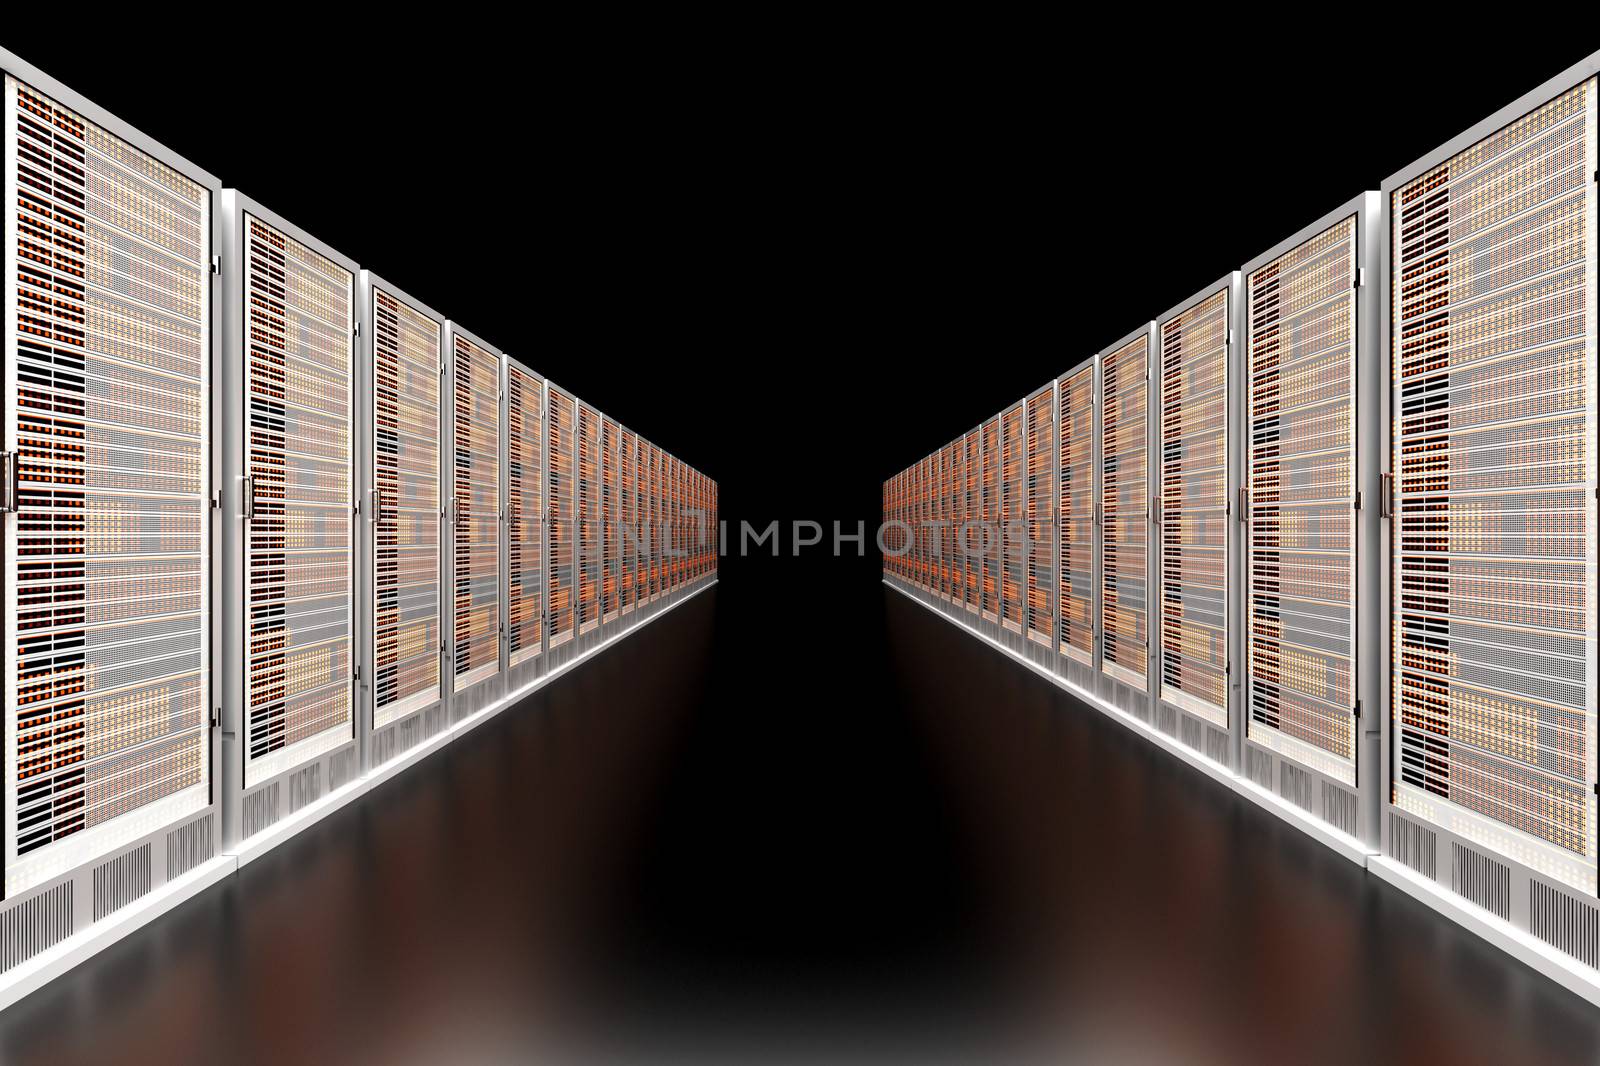 Server racks in a row. 3d illustration.